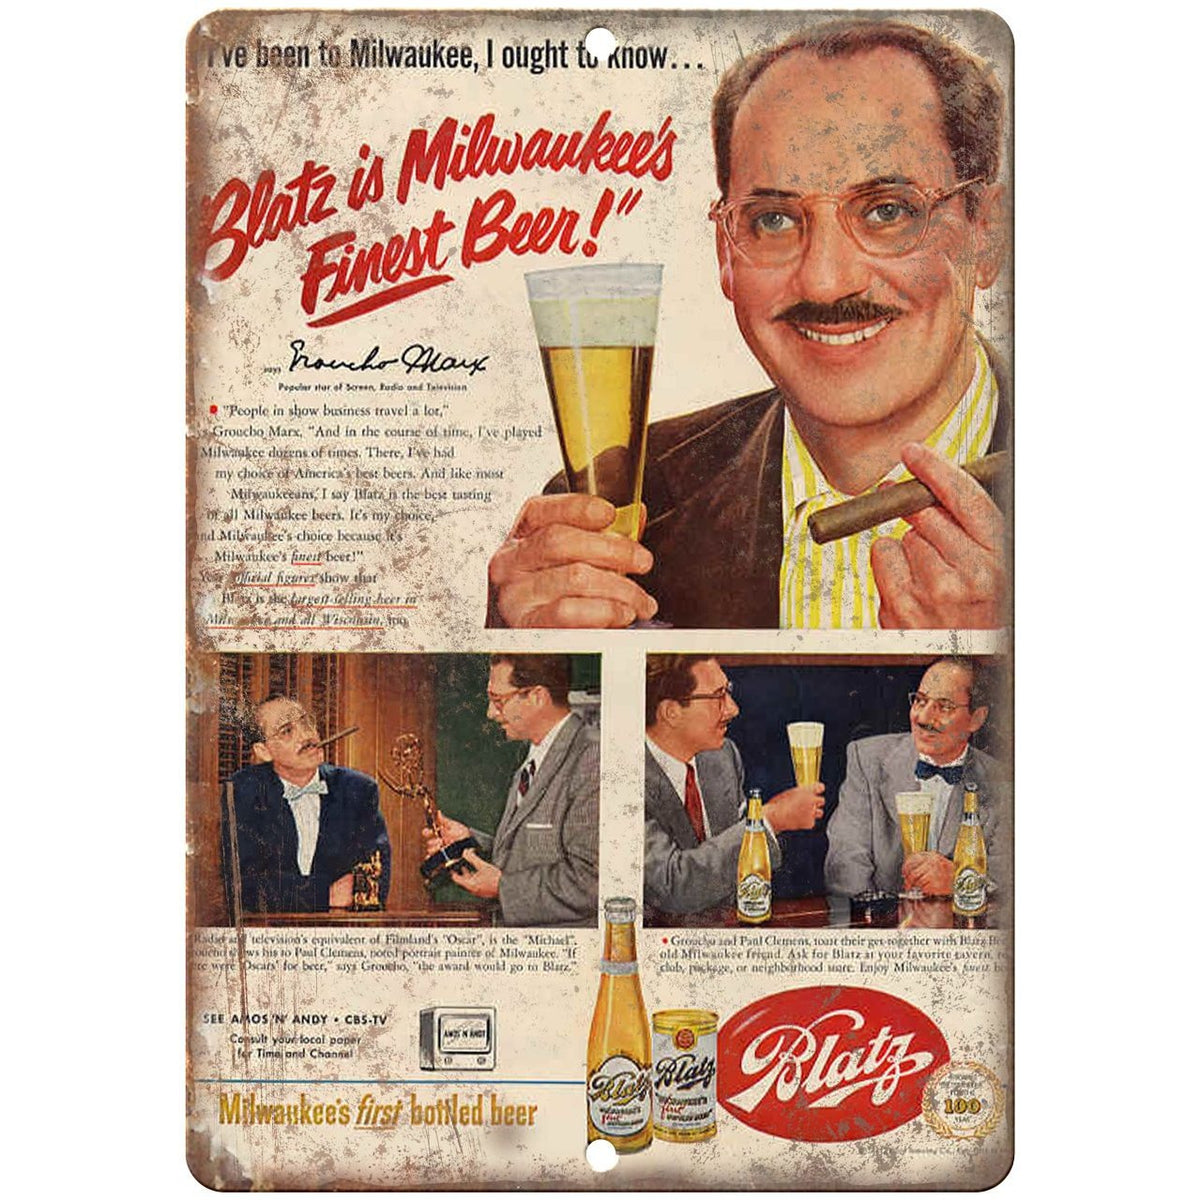 Blatz Brewery Painting, Postcard